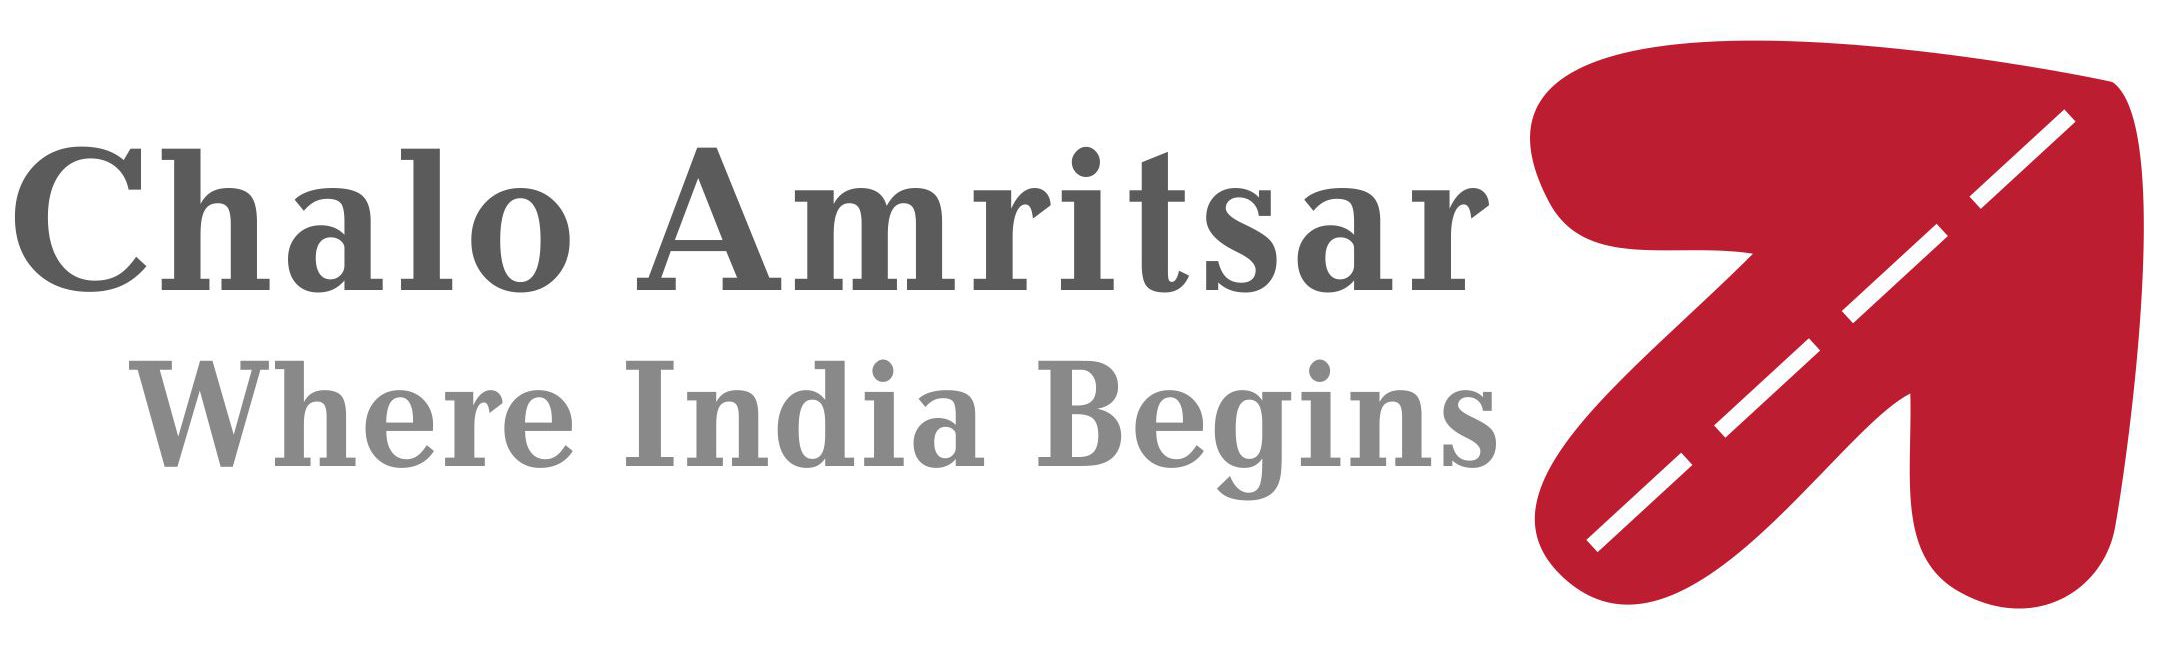 chalo amritsar logo